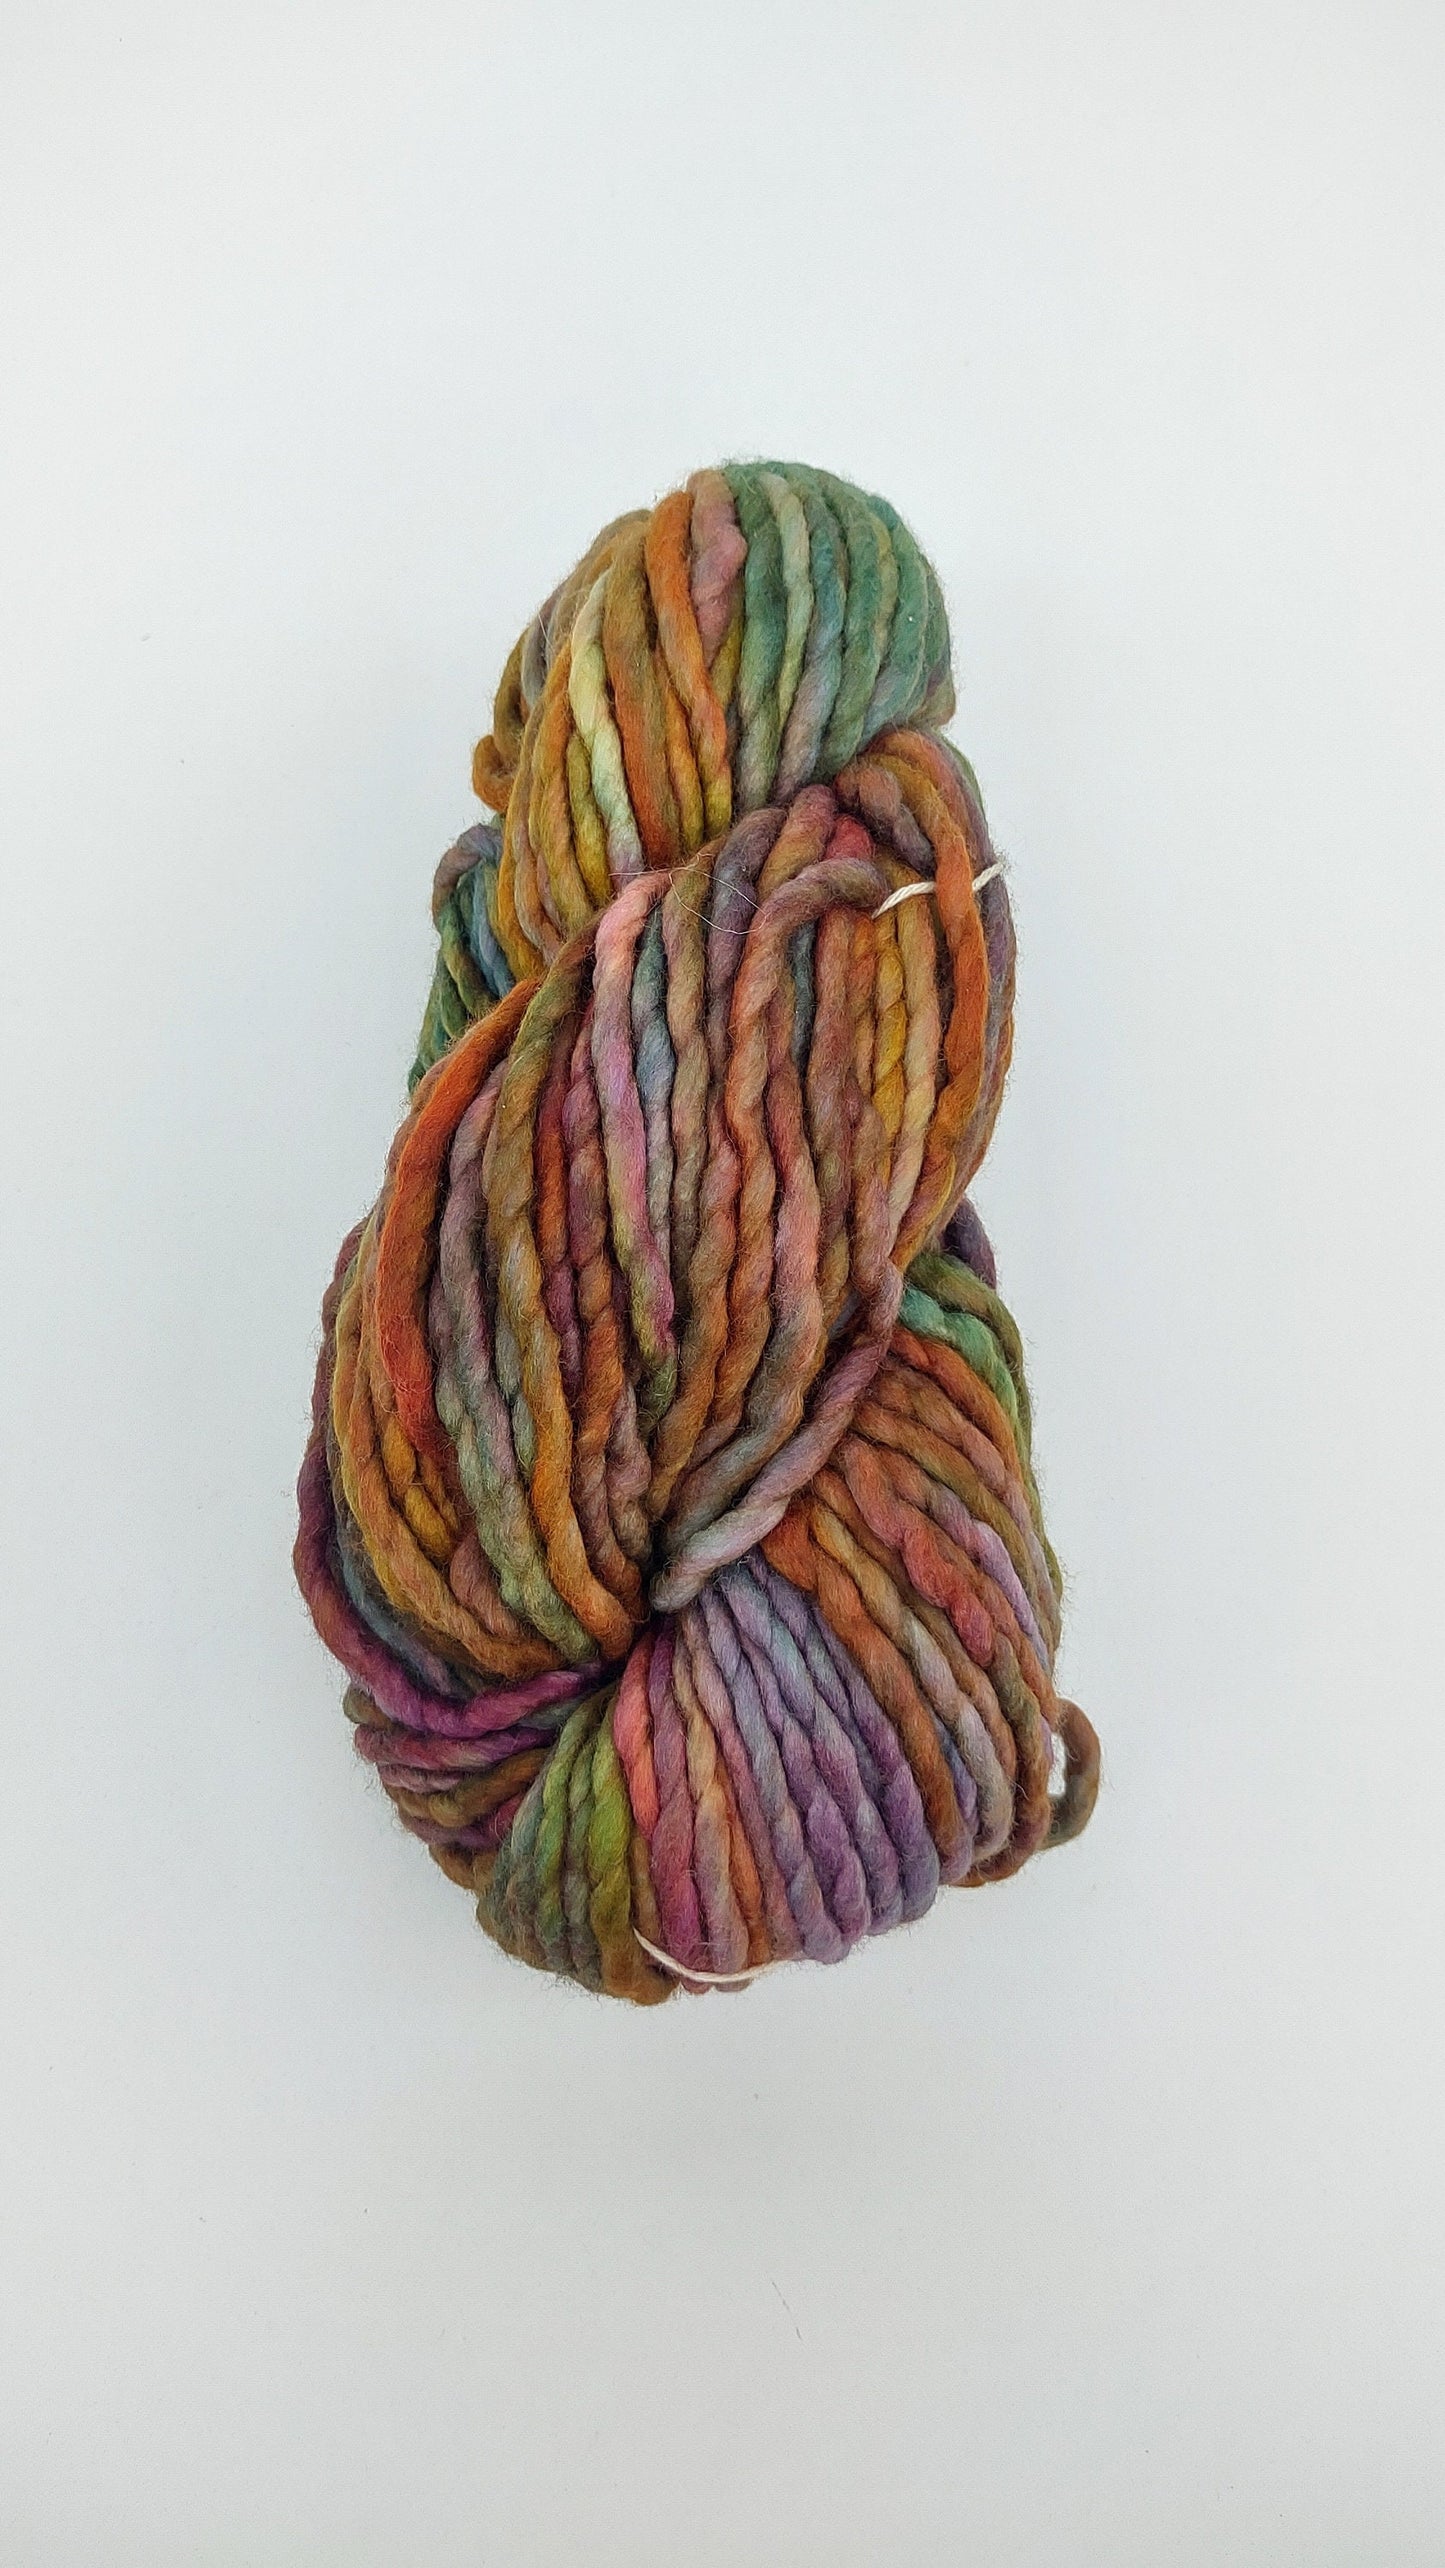 Malabrigo Rasta Yarn in color Diana. Merino Wool. Soft Warm Yarn. Variegated Yarn. Knitting Crochet Wool. Autumn Rainbow Colors. Knit Kit